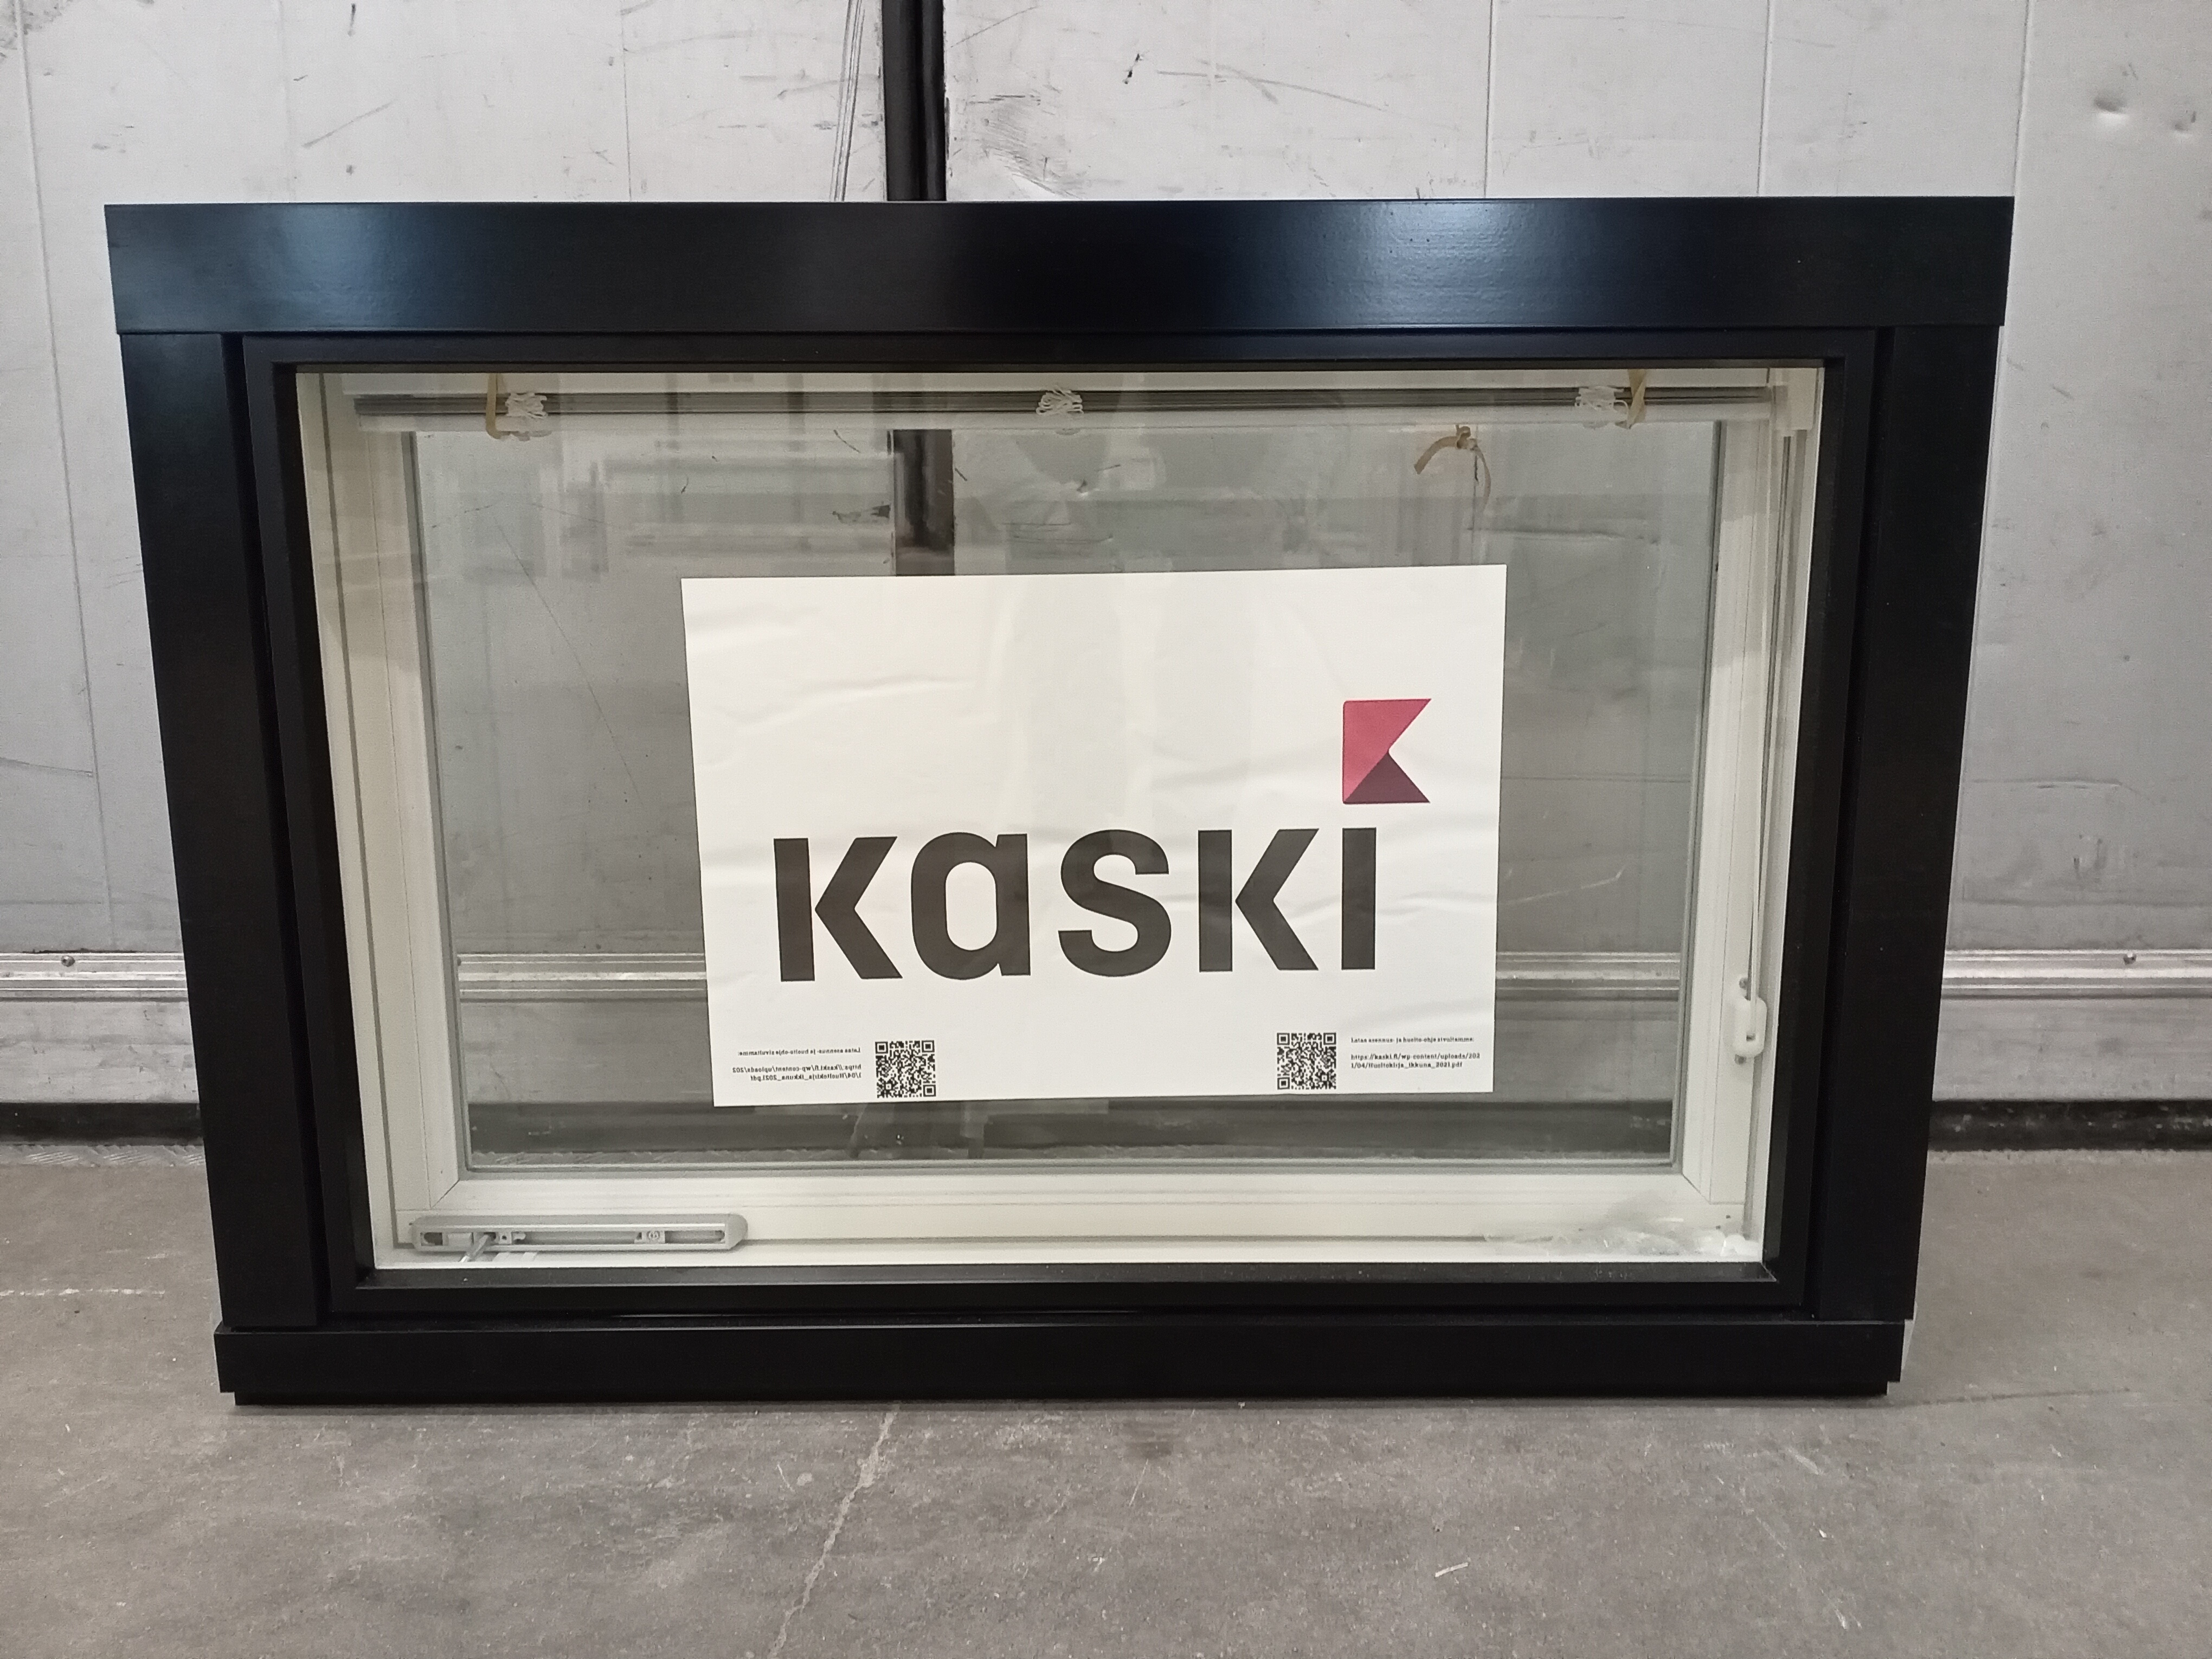 KP3900 Kaskipuu MSEA 170, 970x670, 10x7 Vit/svart. Vädringsfönster